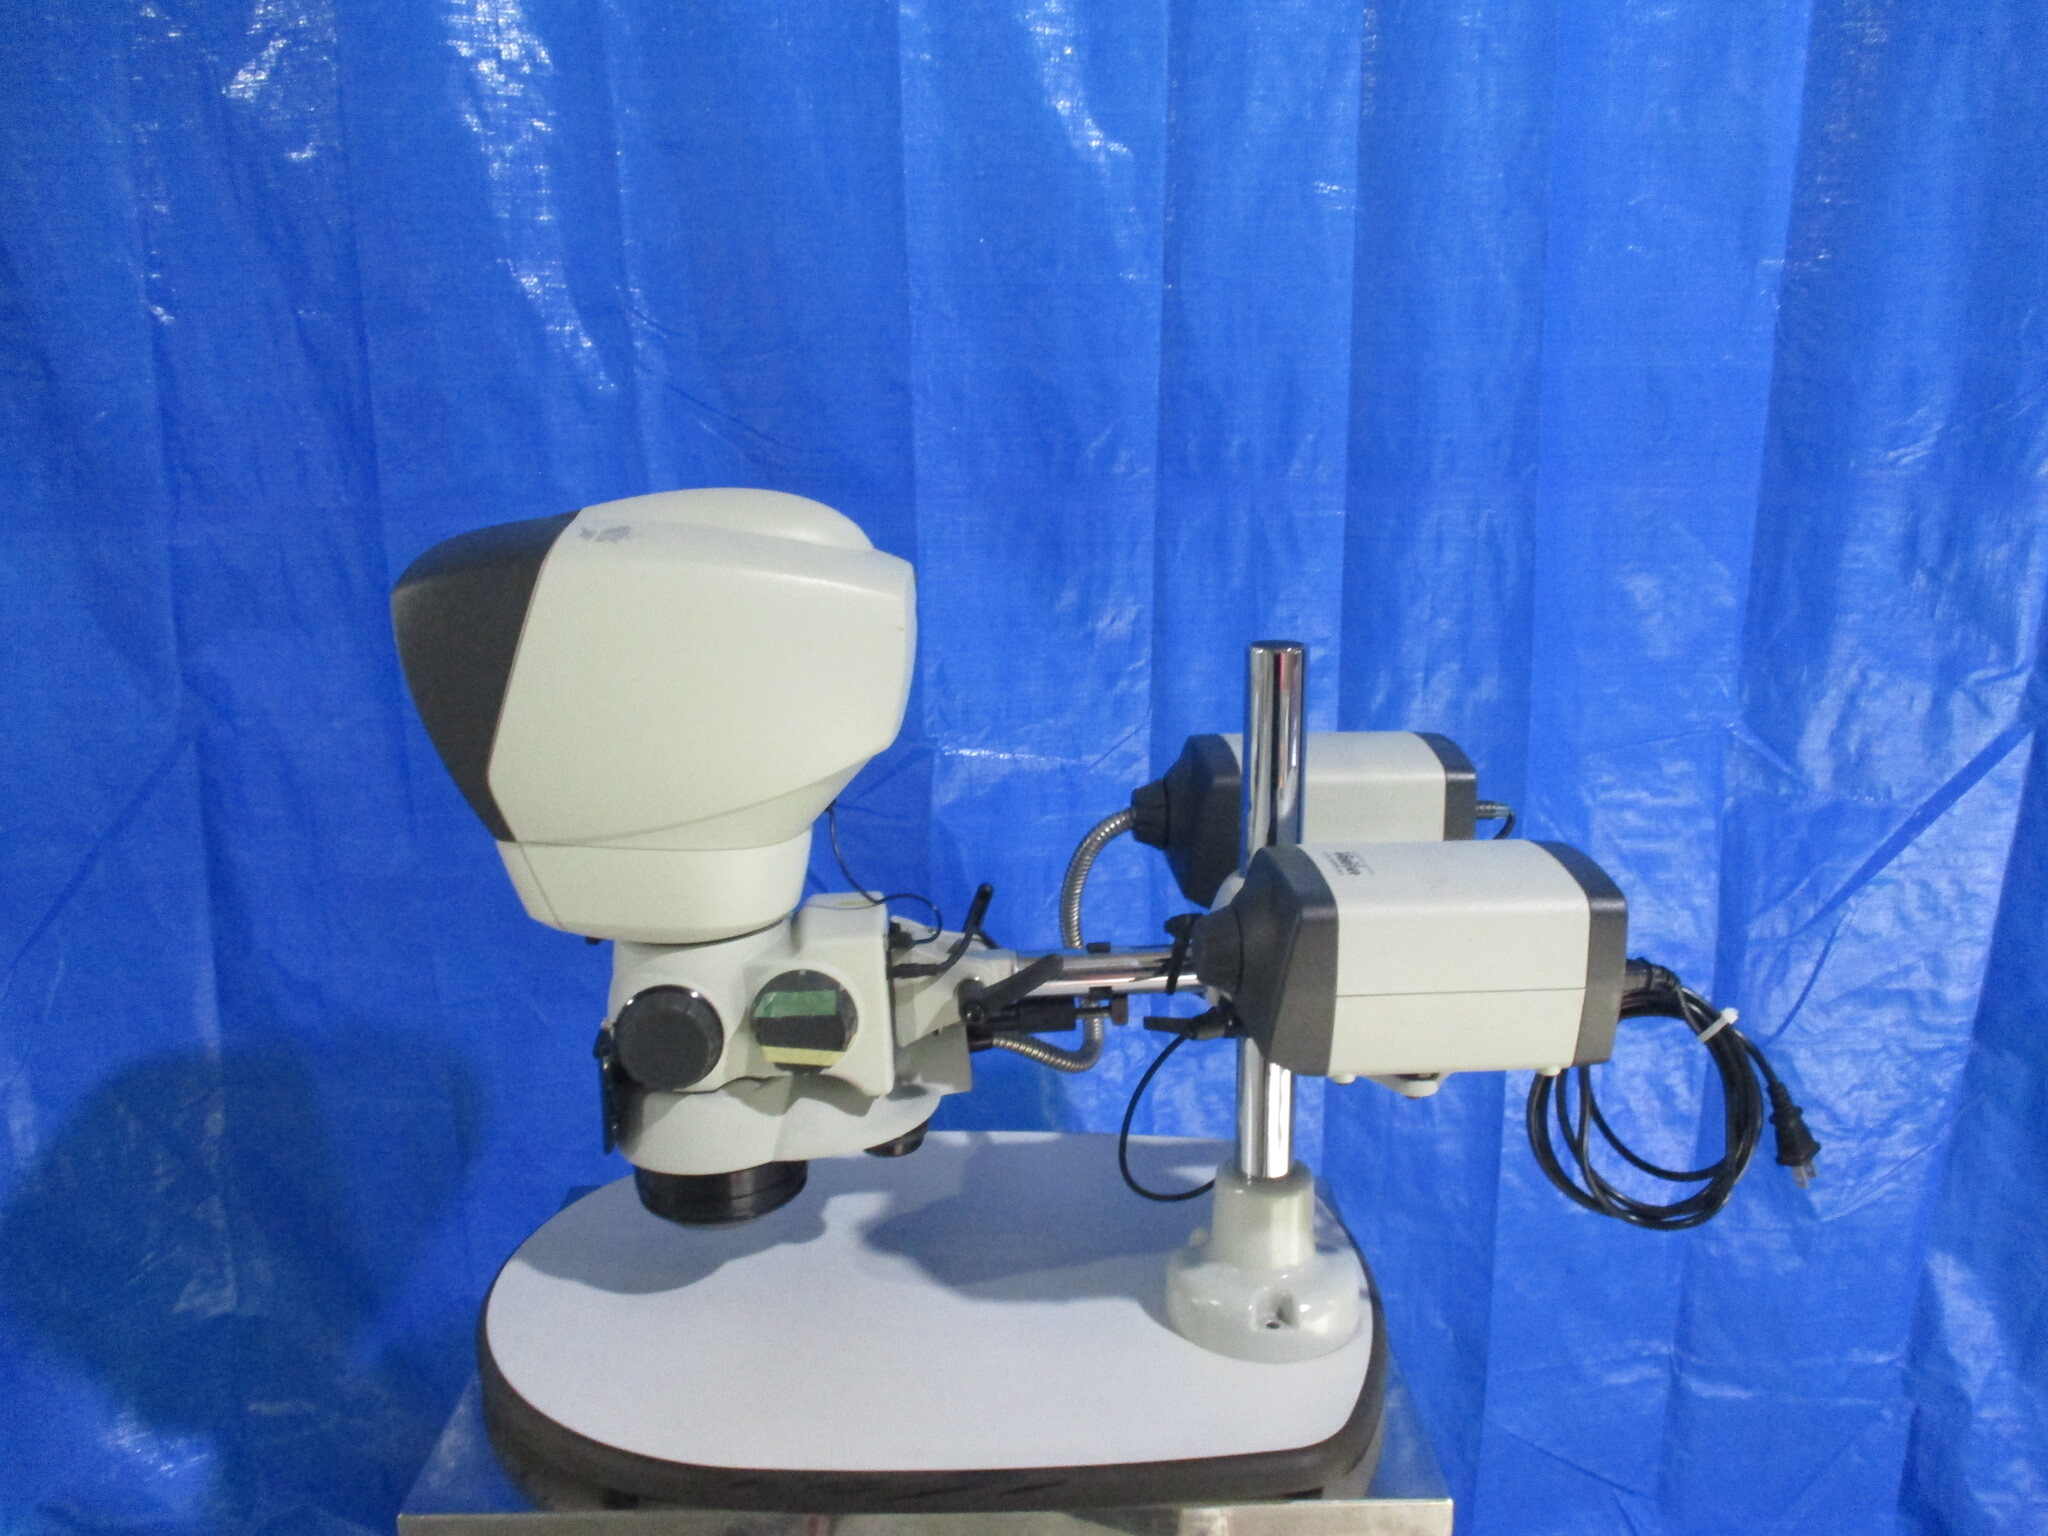  used Vision LYNX STEREO DYNASCOPE links stereo Dyna scope microscope 21 VAC 150W PSU 115 230 MAX 310W (AAD-D-R51220E004)